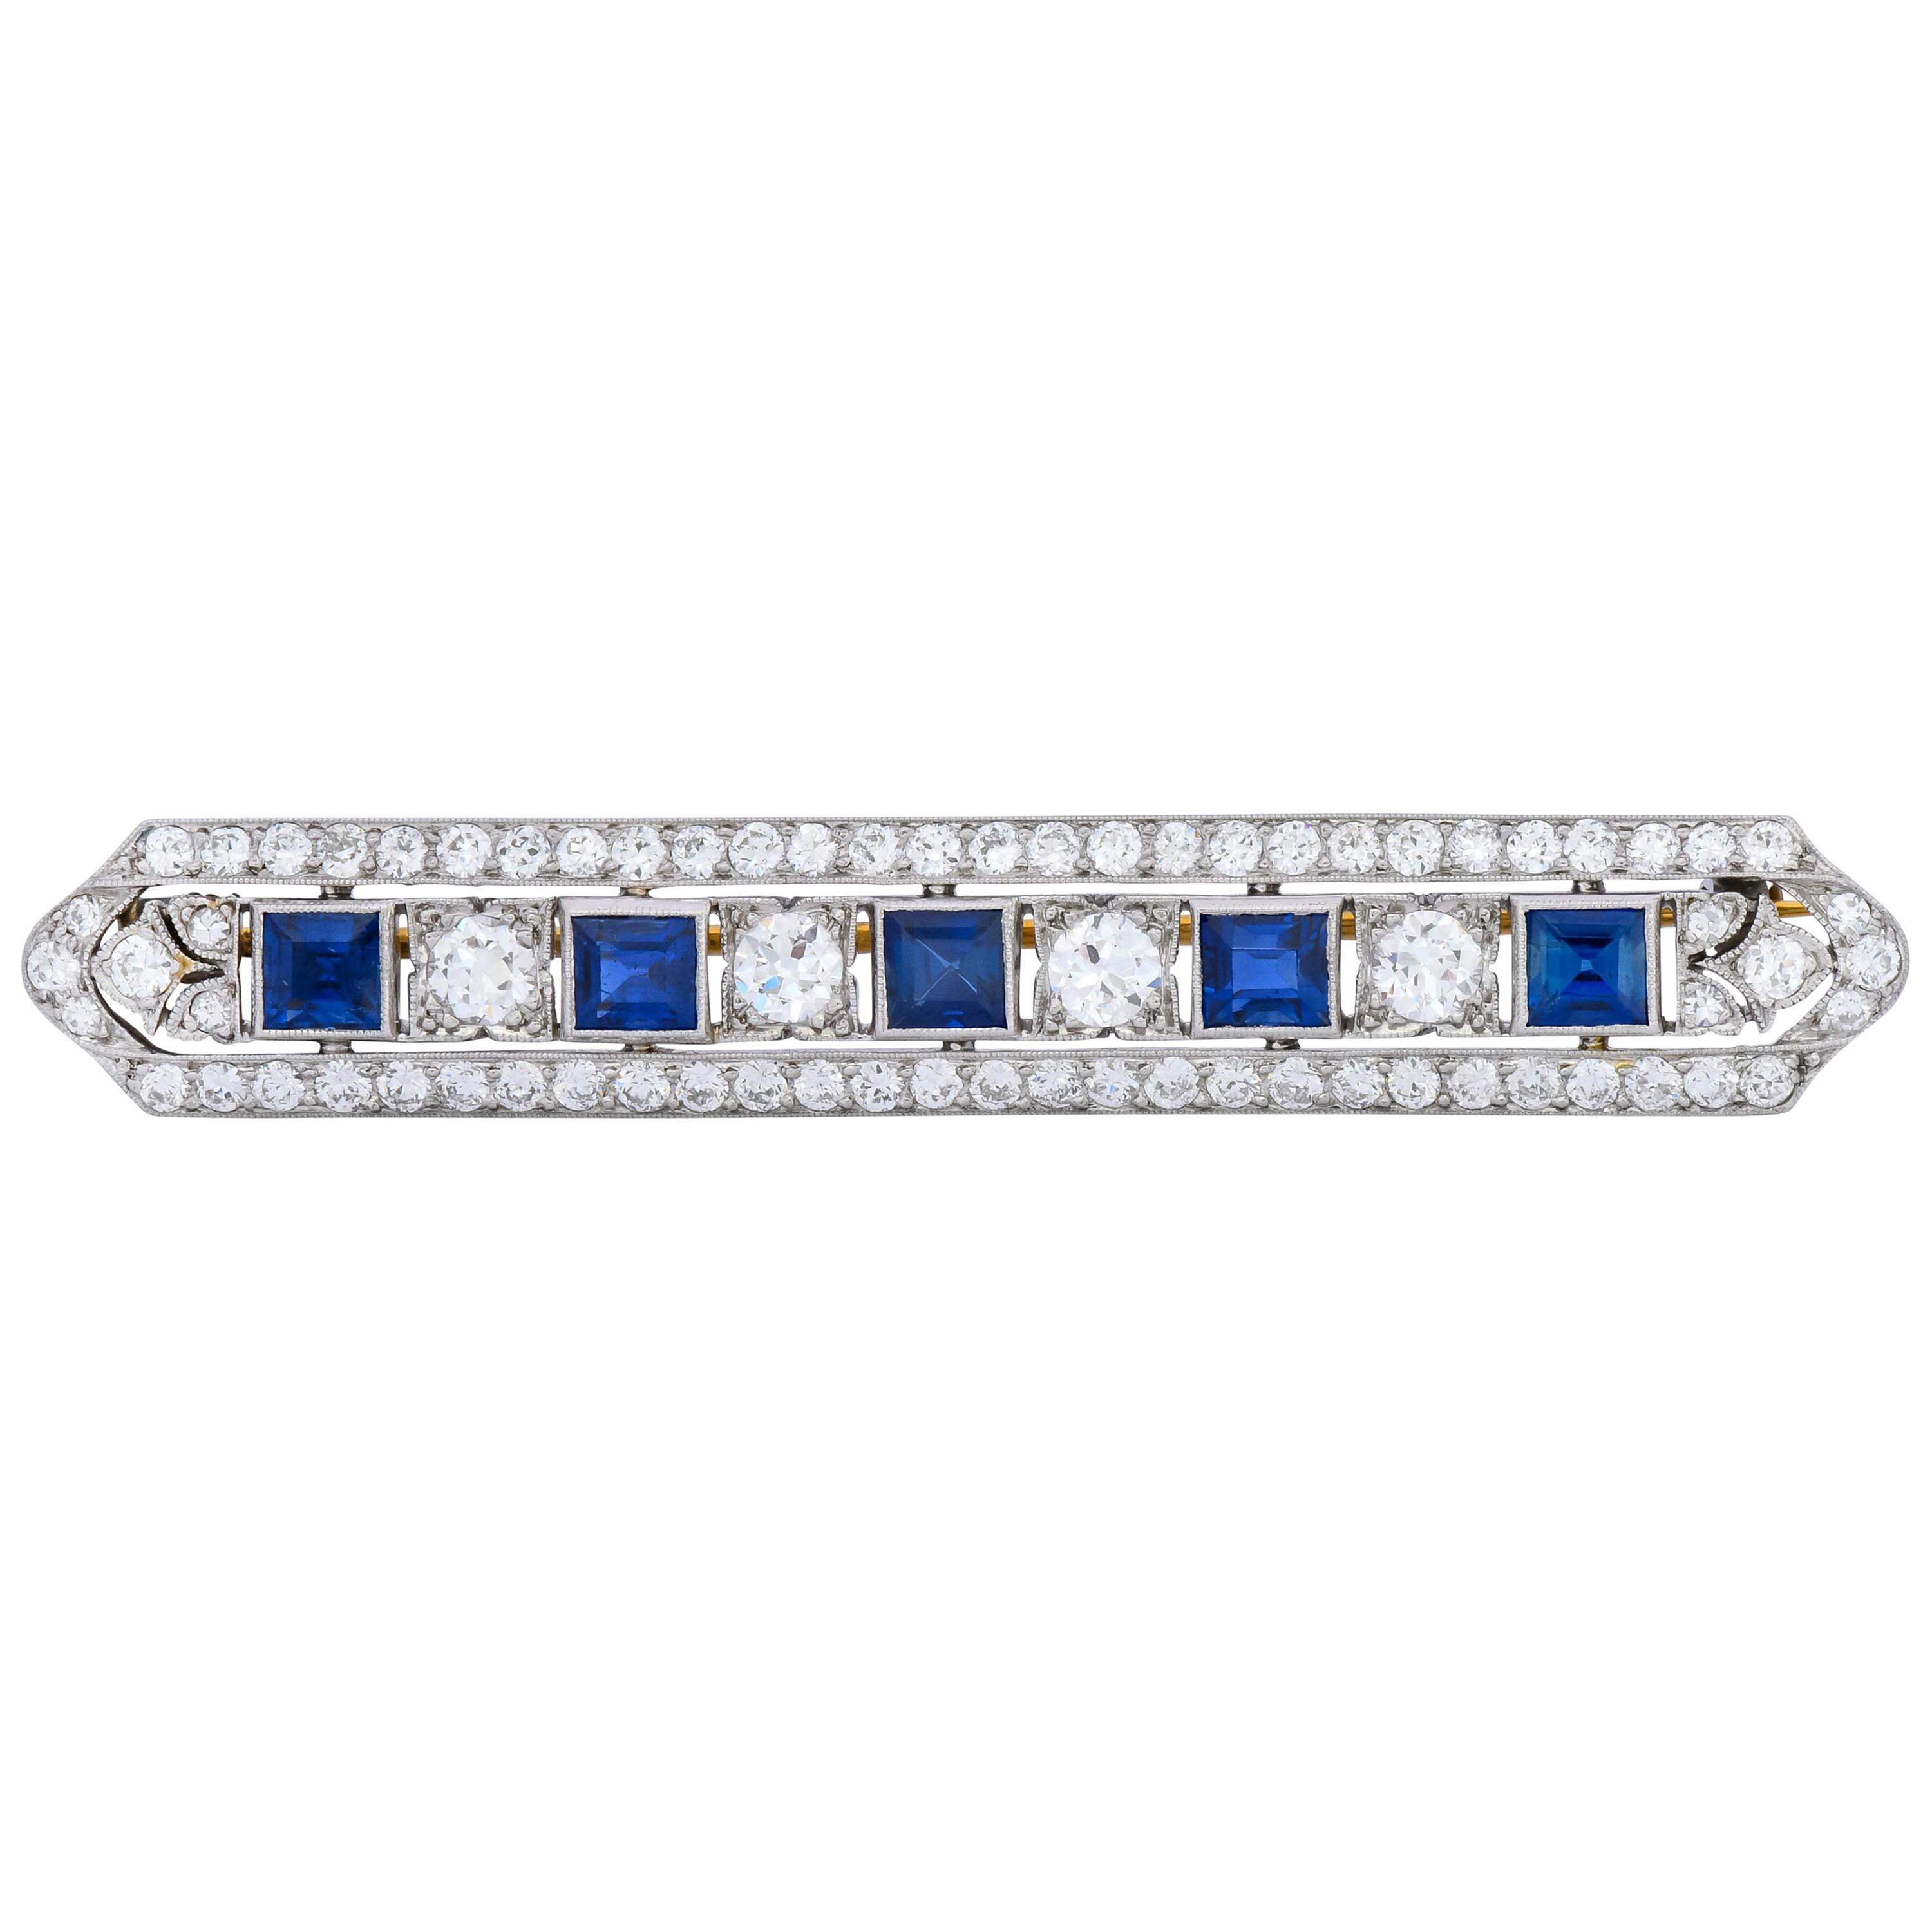 Tiffany & Co. Art Deco 5.04 Carat Sapphire Diamond Platinum Bar Brooch